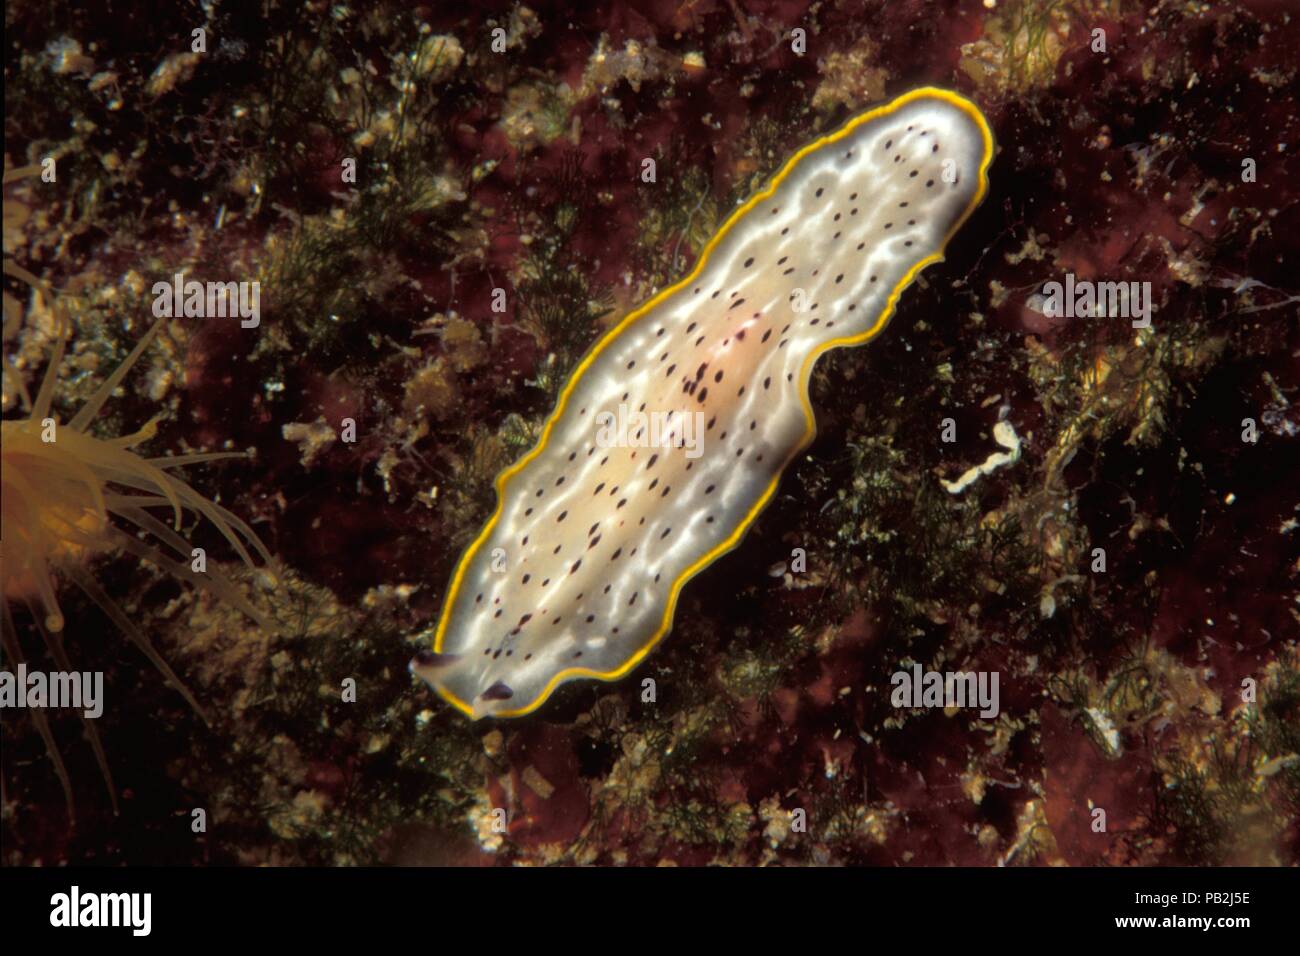 Moseley's flatworm, Gefleckter Plattwurm, Prostheceraeus moseley, Ibiza, Mediterraneo Mittelmeer Foto Stock